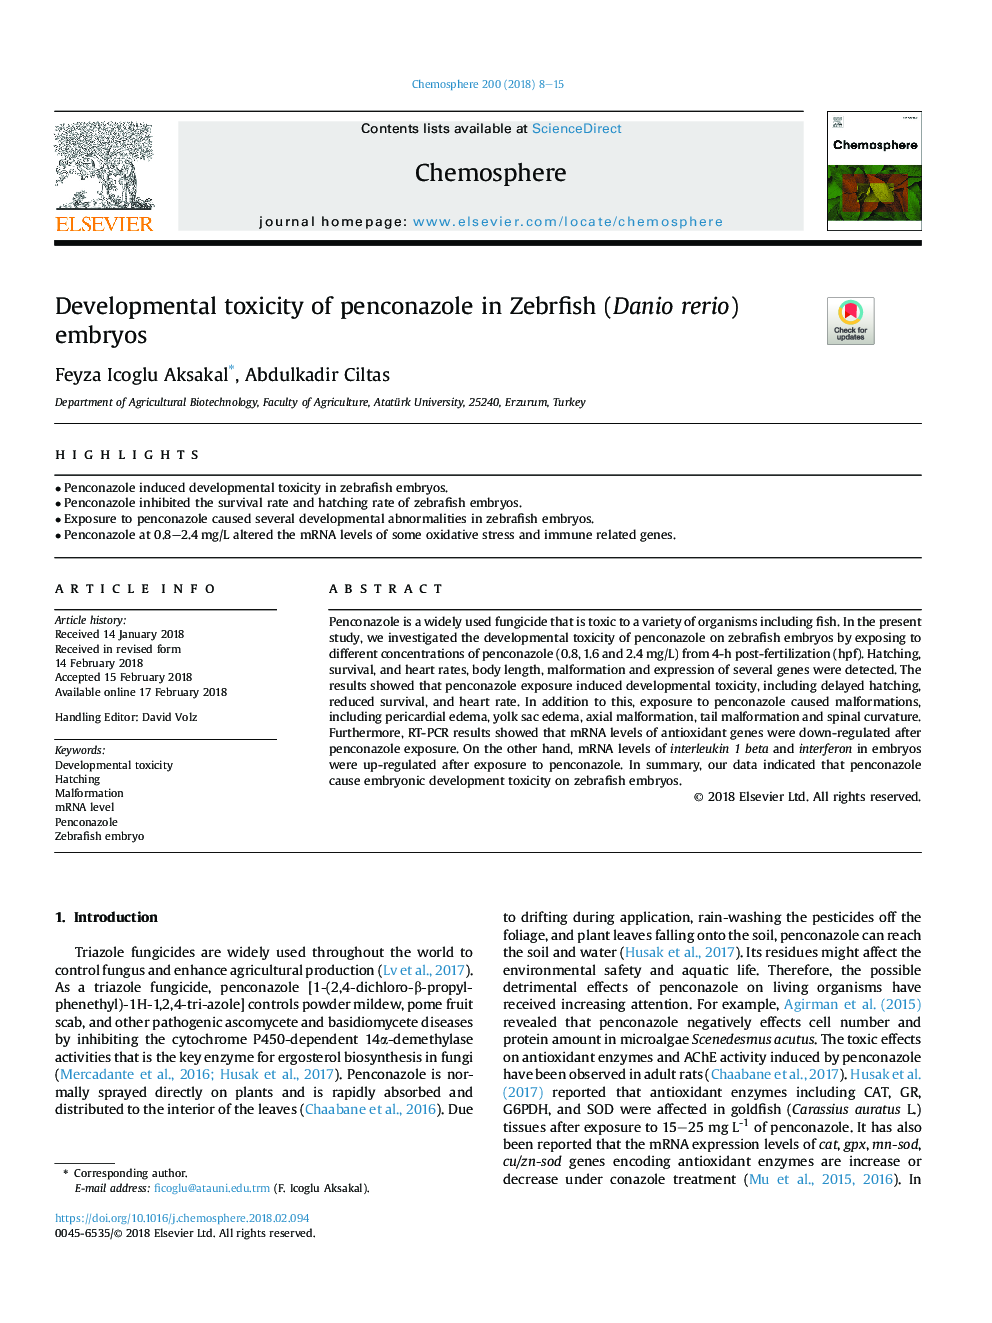 Developmental toxicity of penconazole in Zebrfish (Danio rerio) embryos